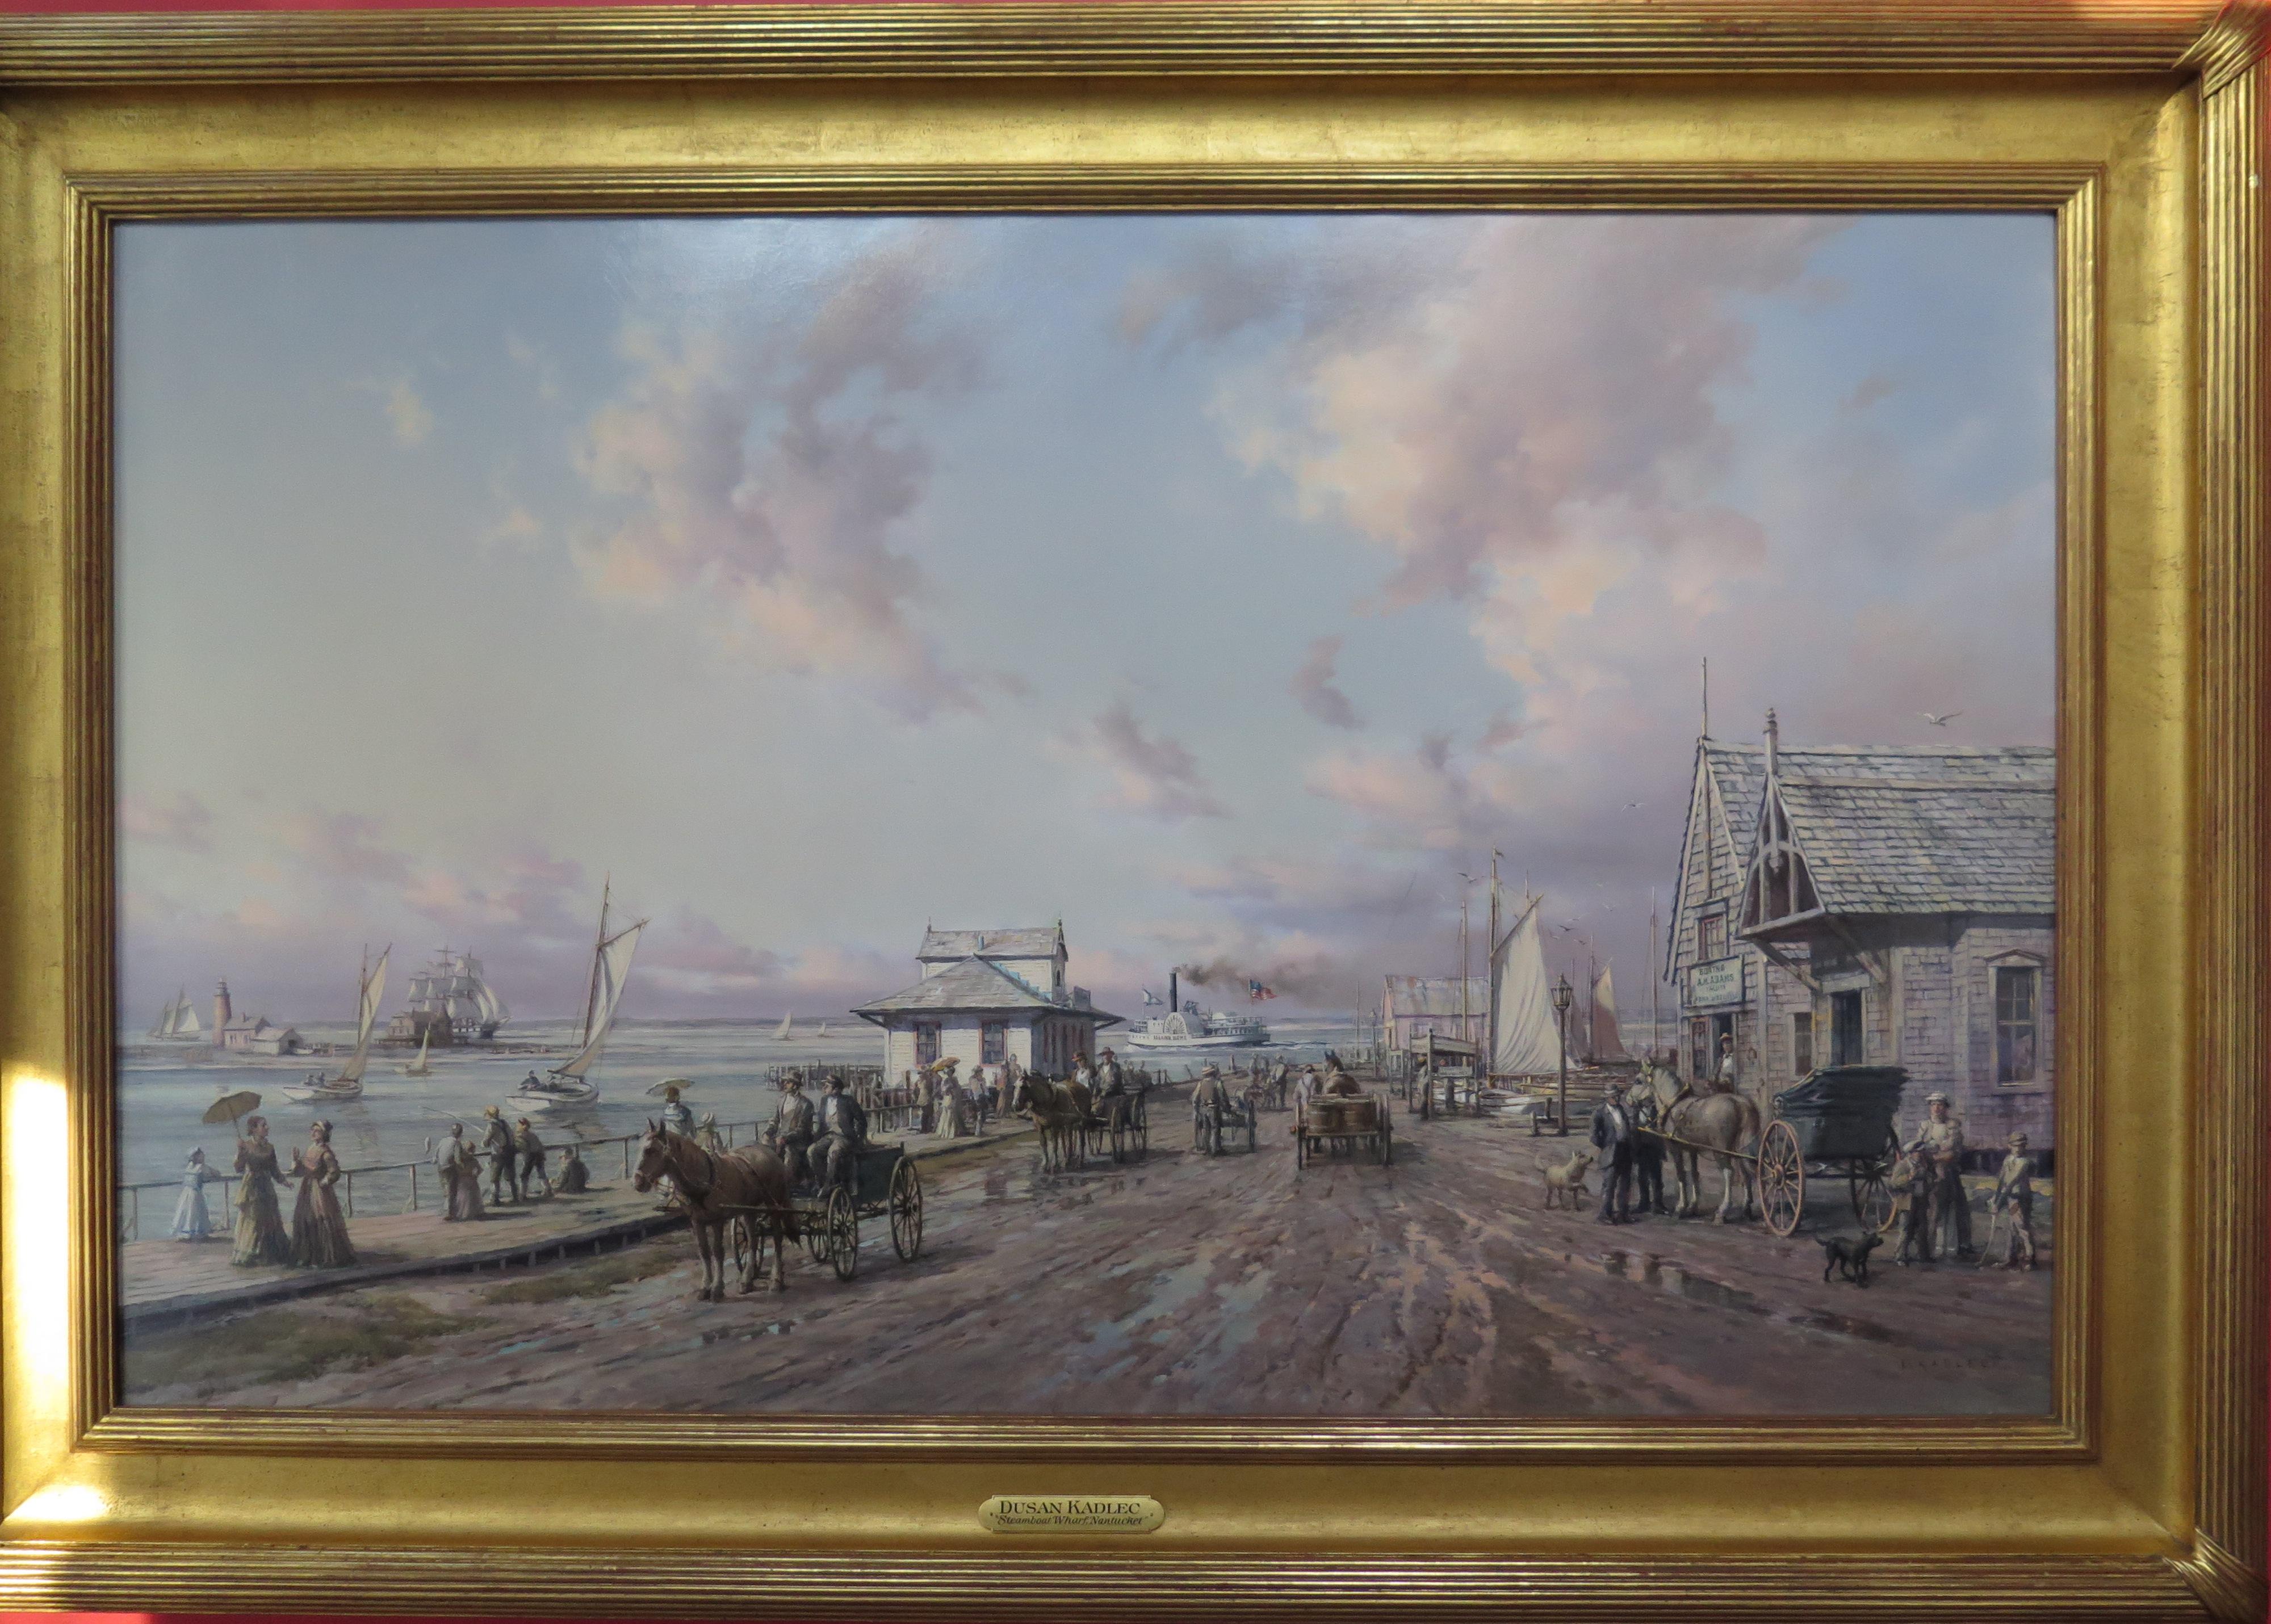 Steamboat Wharf, Nantucket, Massachusetts, c. 1880's - Painting by Dusan Kadlec